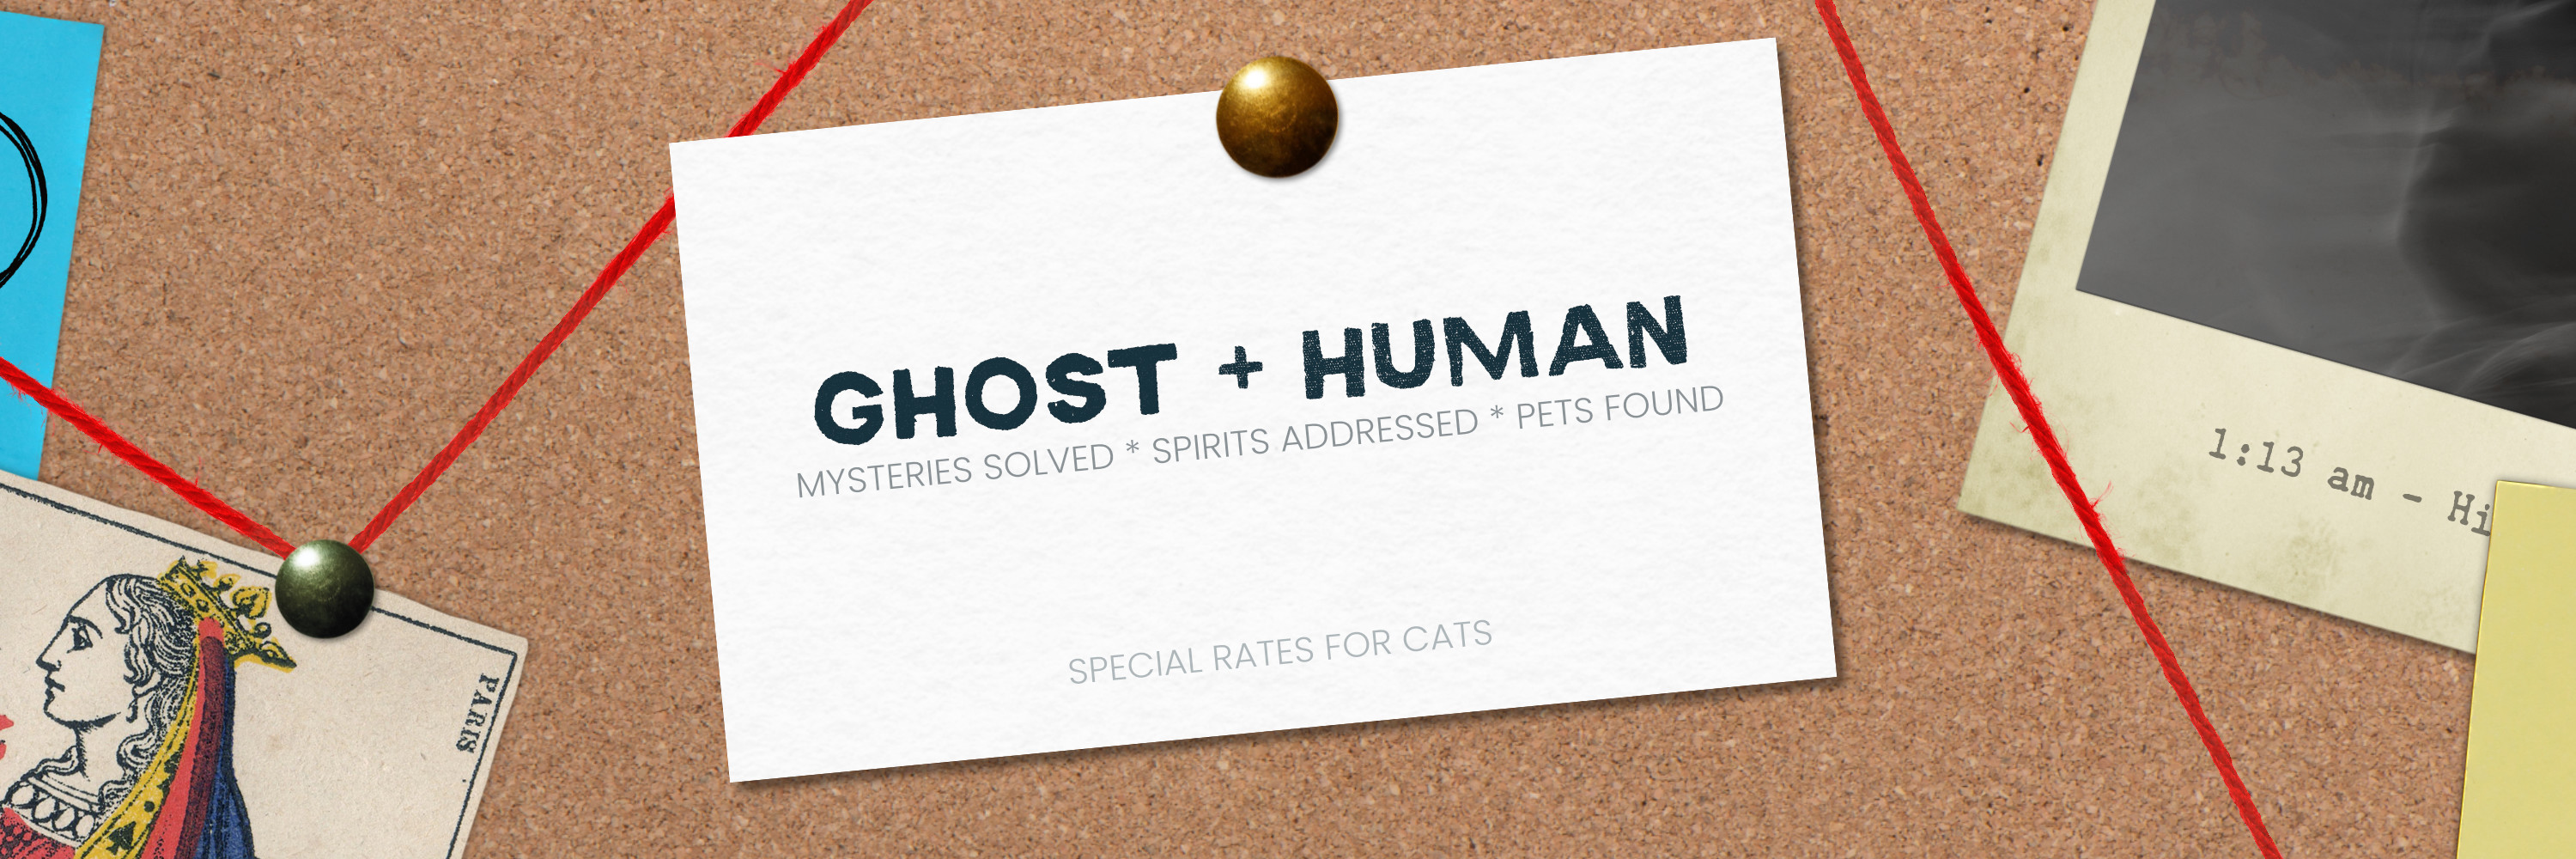 Ghost + Human